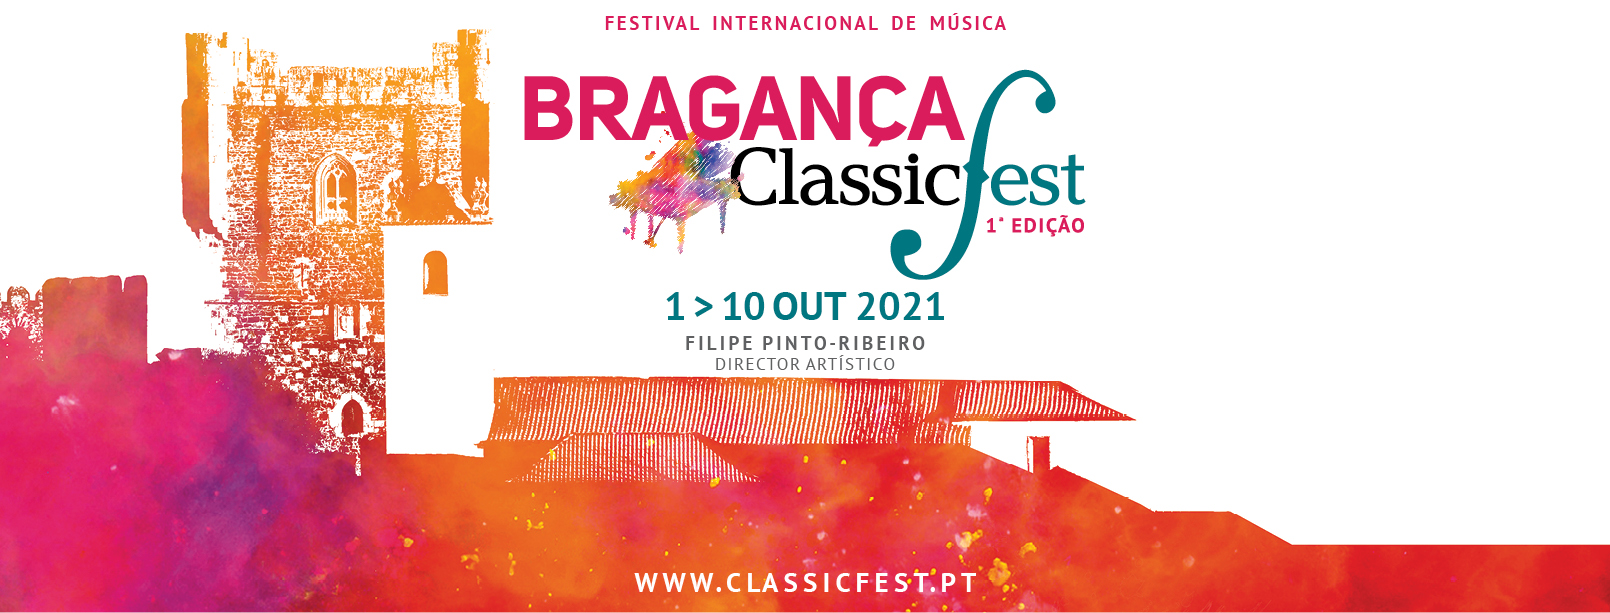 INTERNATIONAL MUSIC FESTIVAL "BRAGANÇA CLASSICFEST"